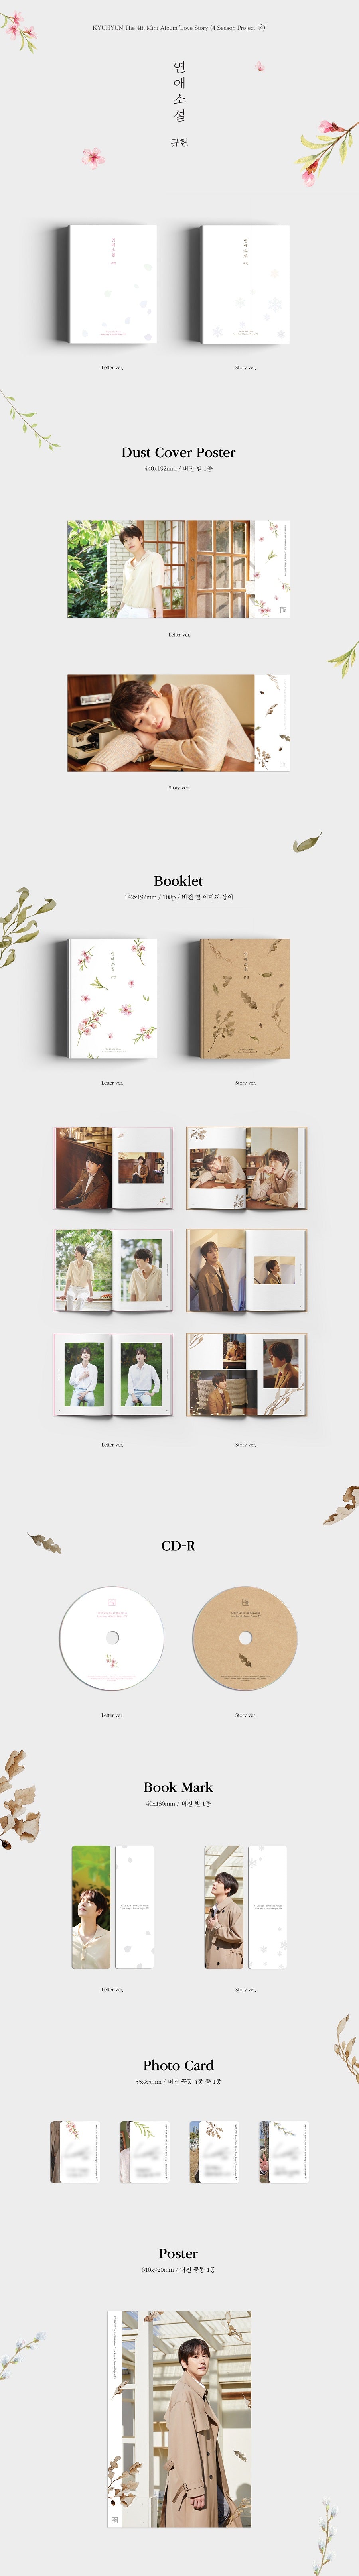 Super Junior : Kyu Hyun Mini Album Vol. 4 - Love Story (4 Season Project) (Random Version)